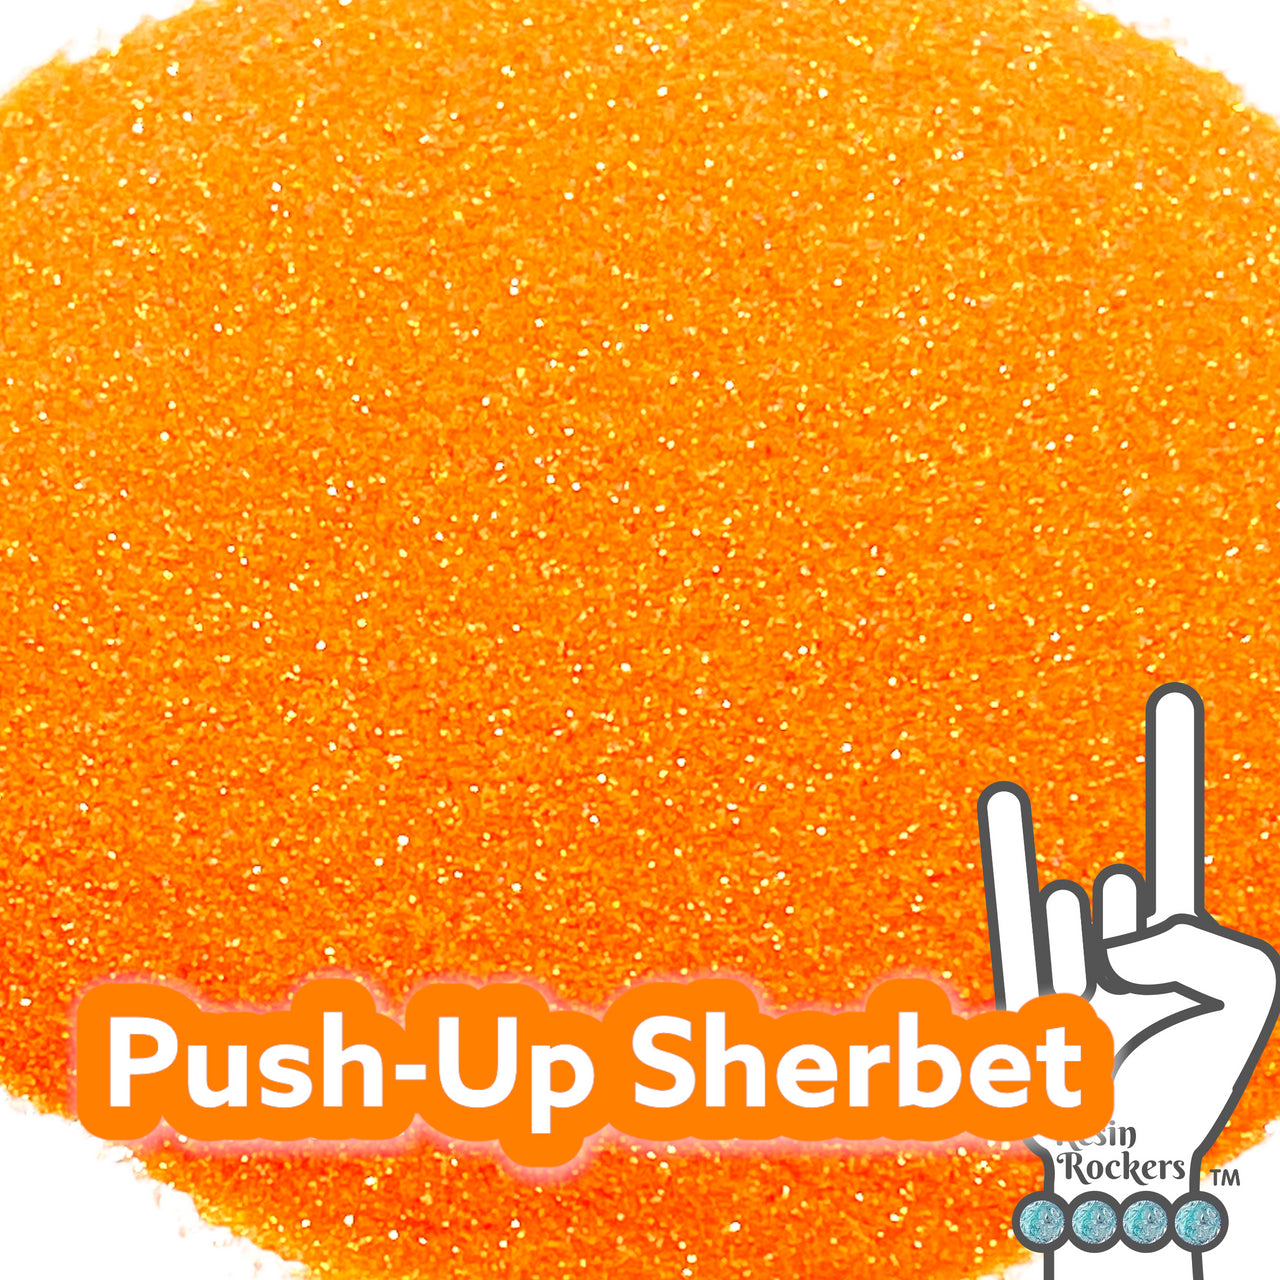 Orange Unicorn Fluff Flake Glitter Mix